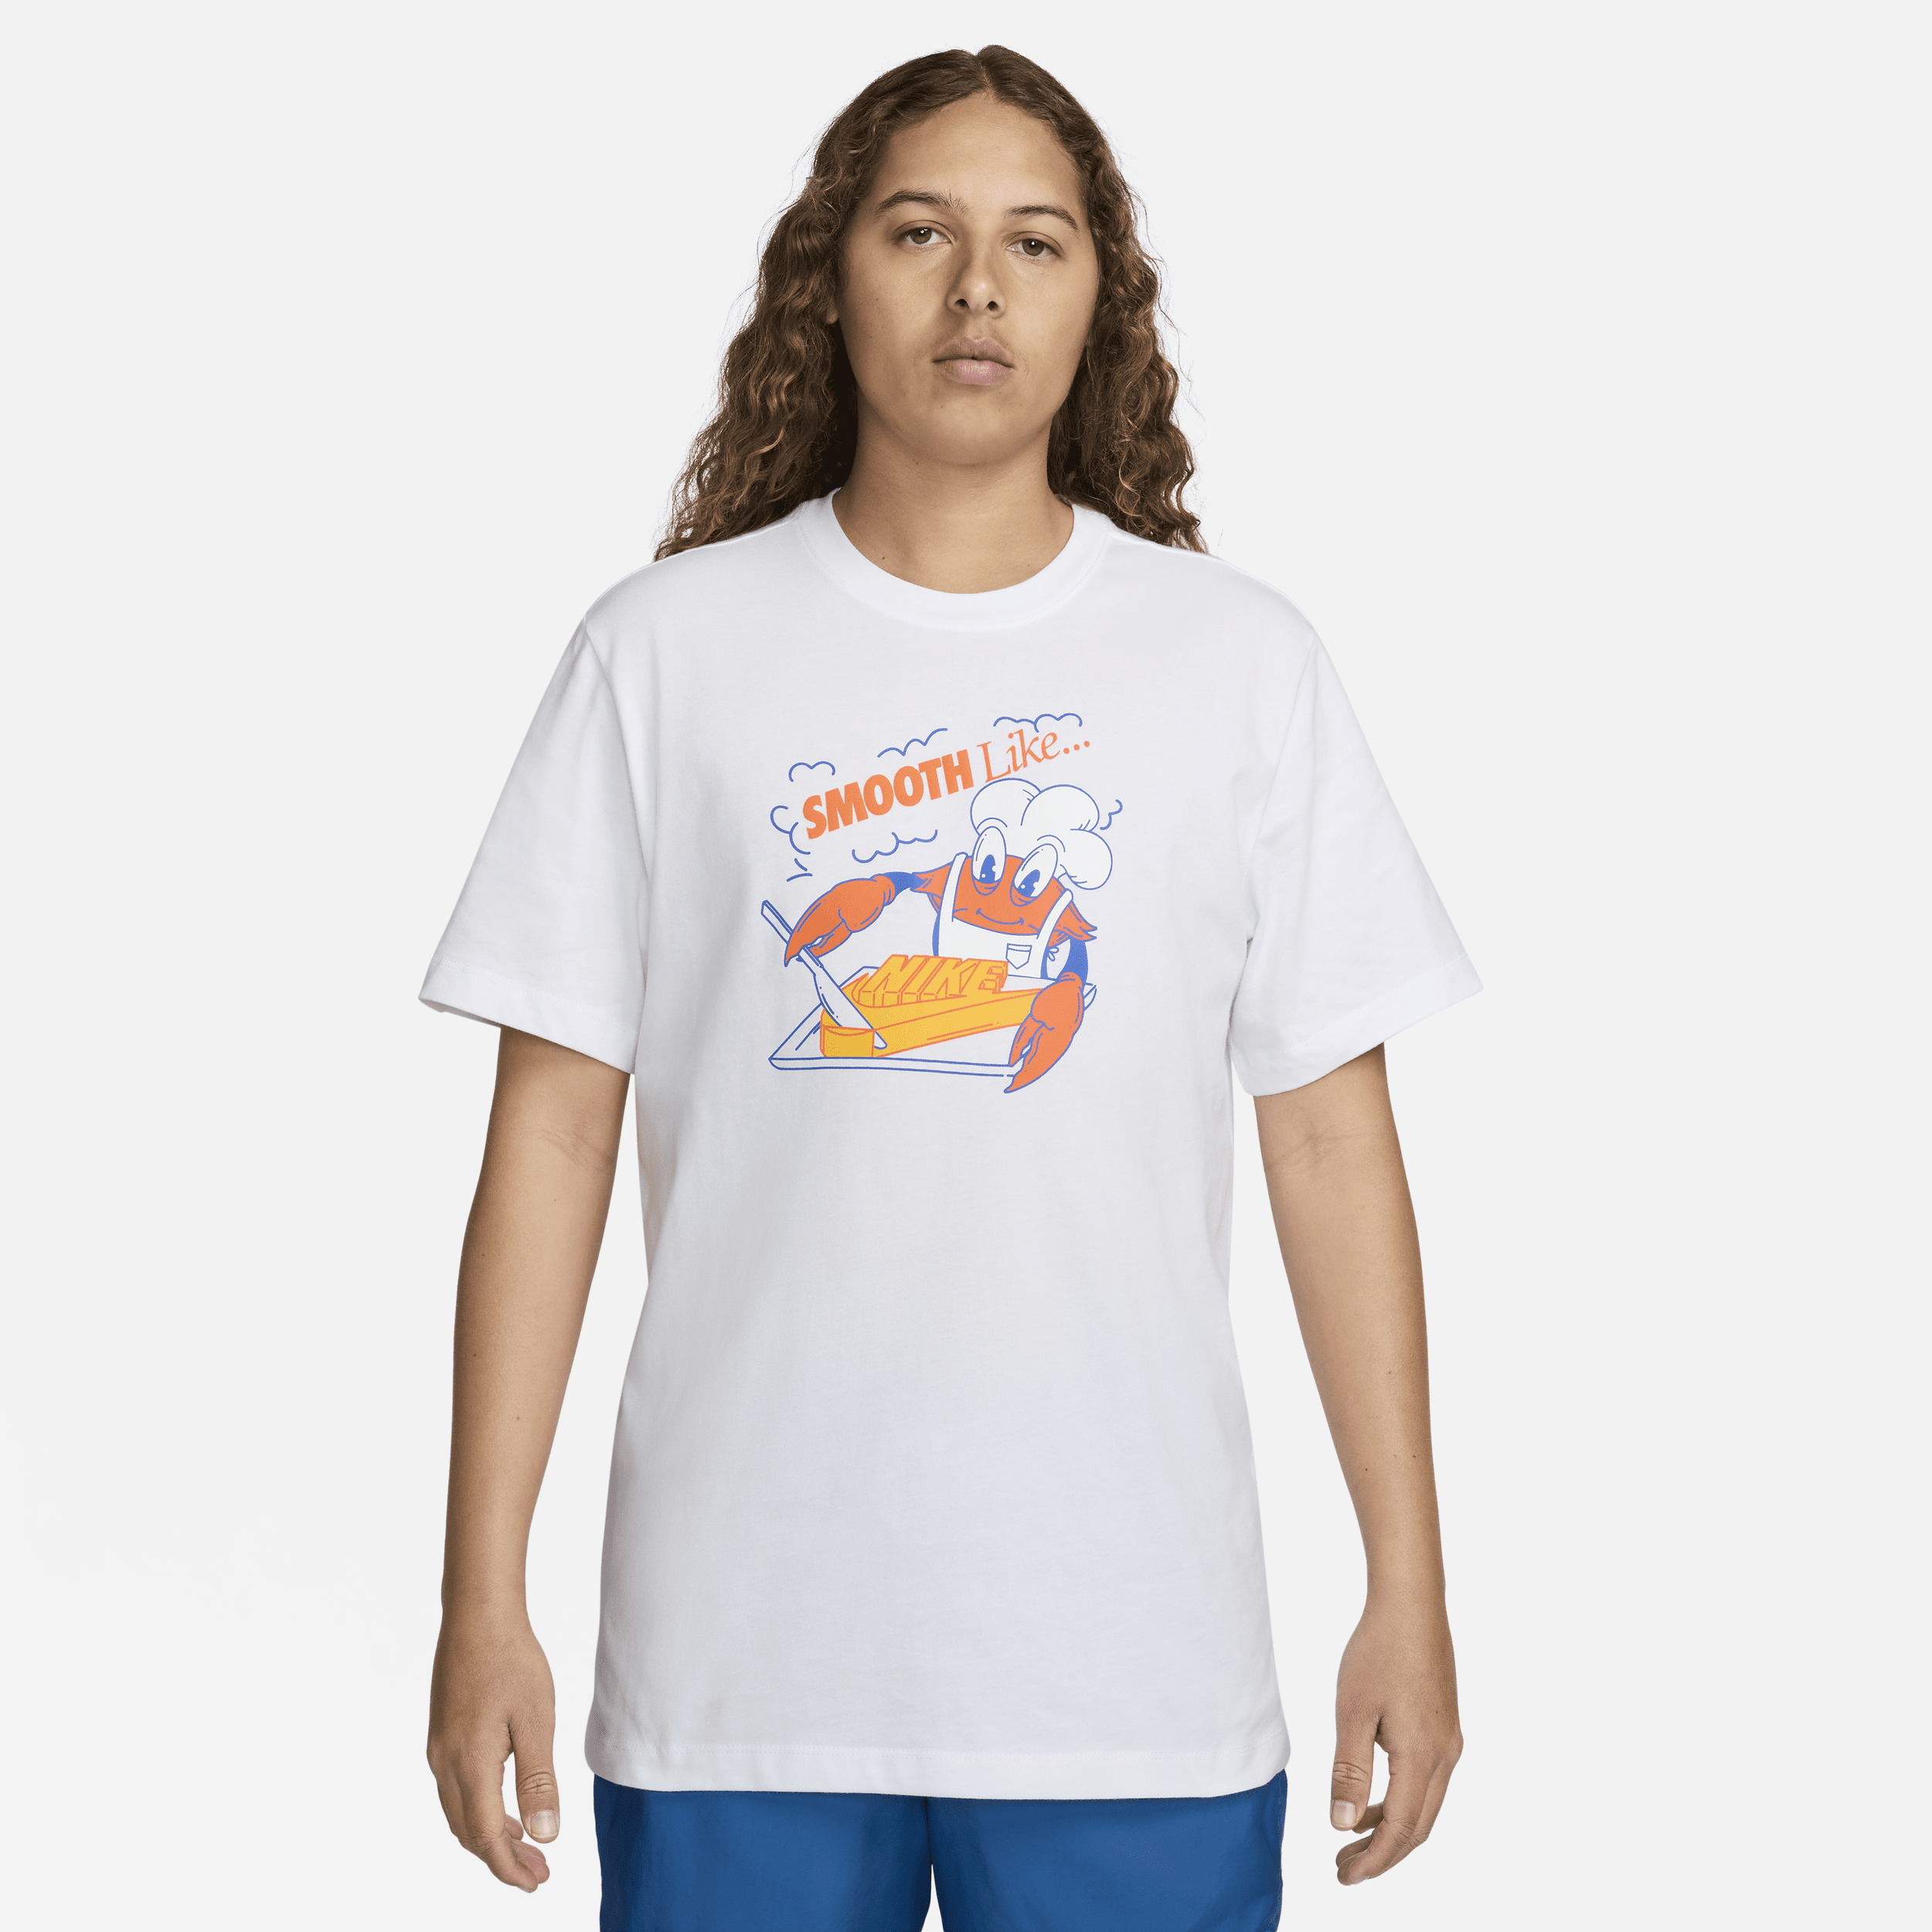 T-shirt Nike Sportswear – Uomo - Bianco